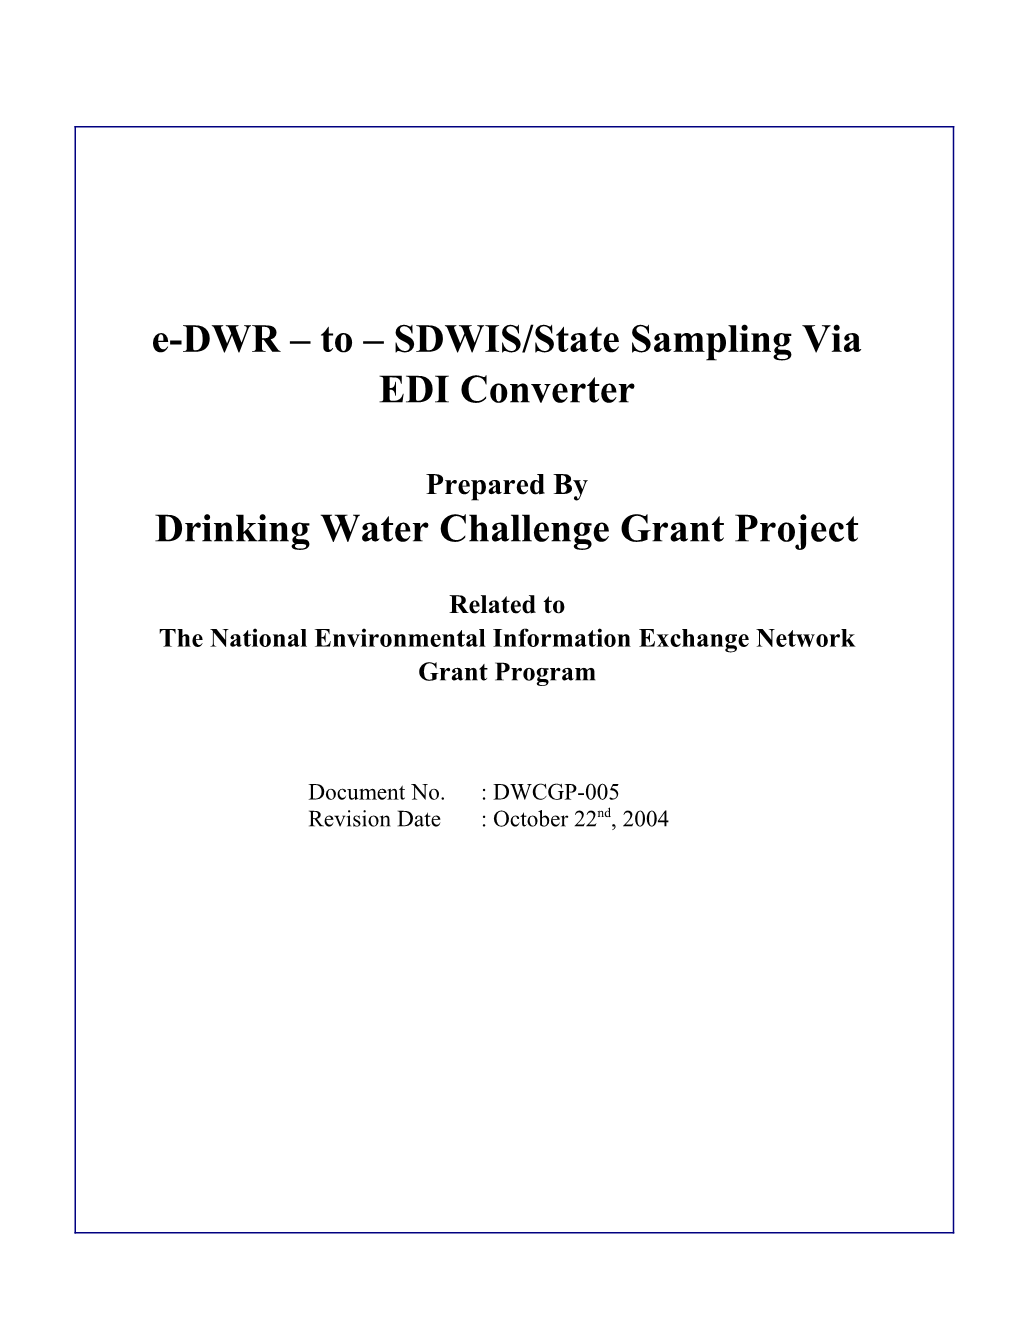 E-DWR to SDWIS/State Sampling Via EDI Converter